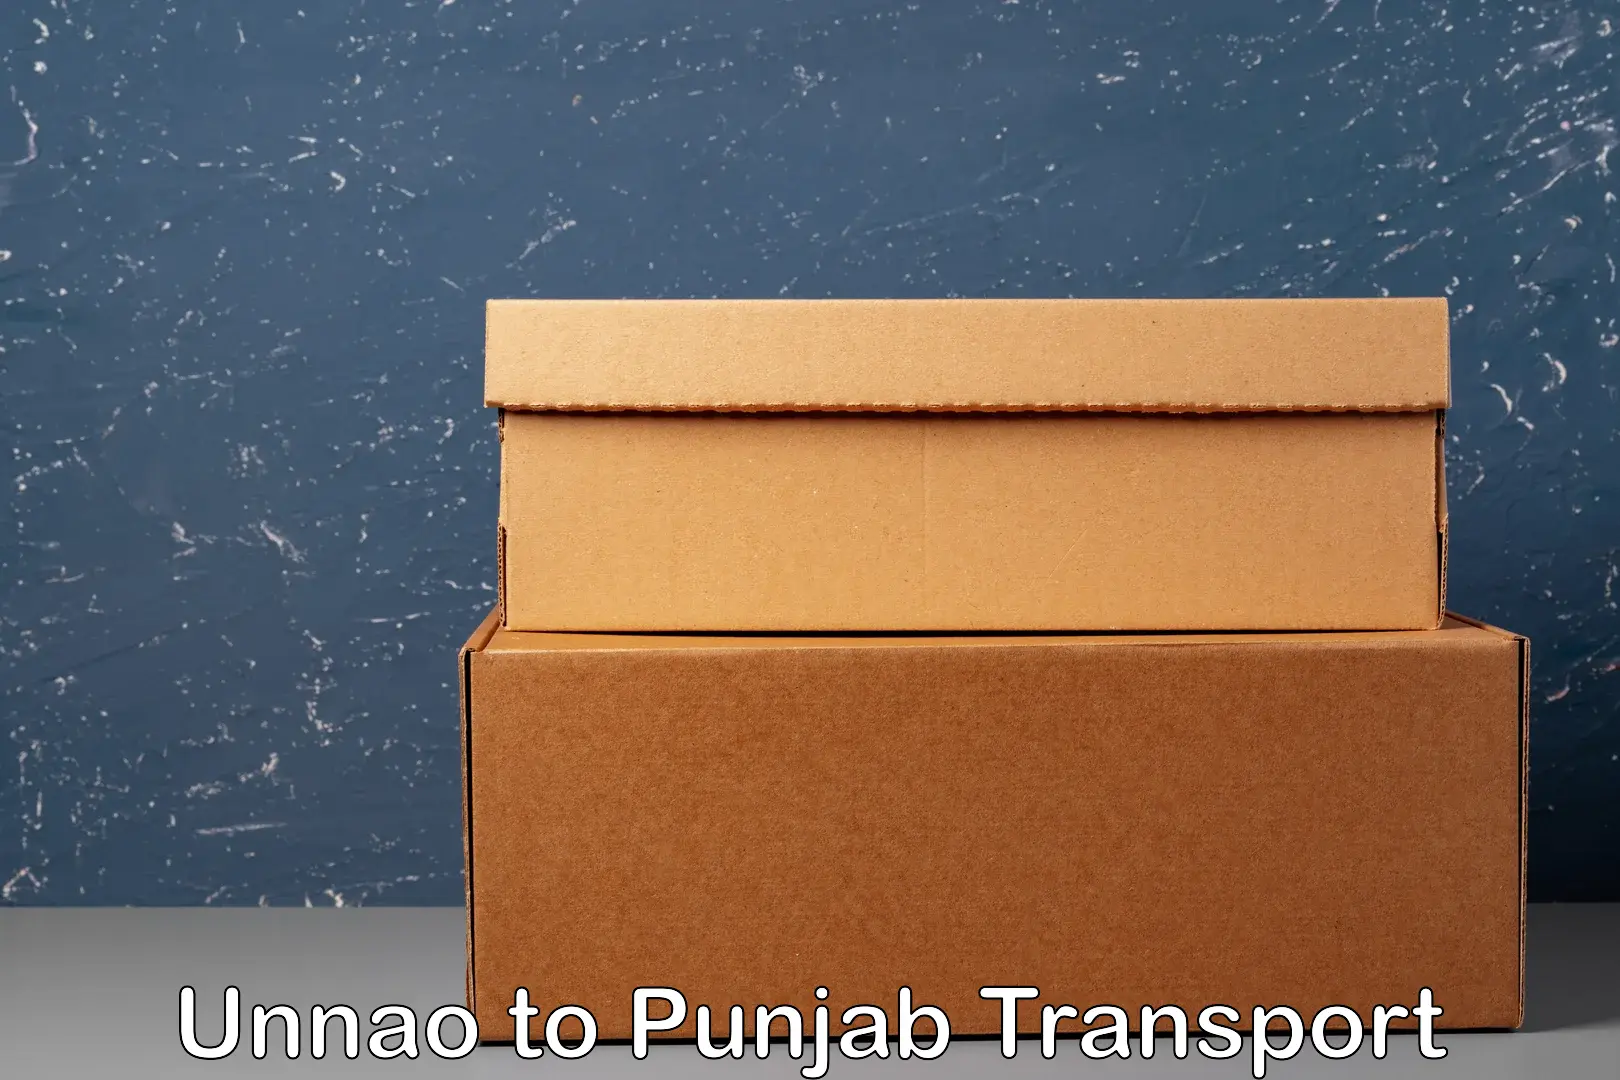 Online transport service Unnao to Punjab